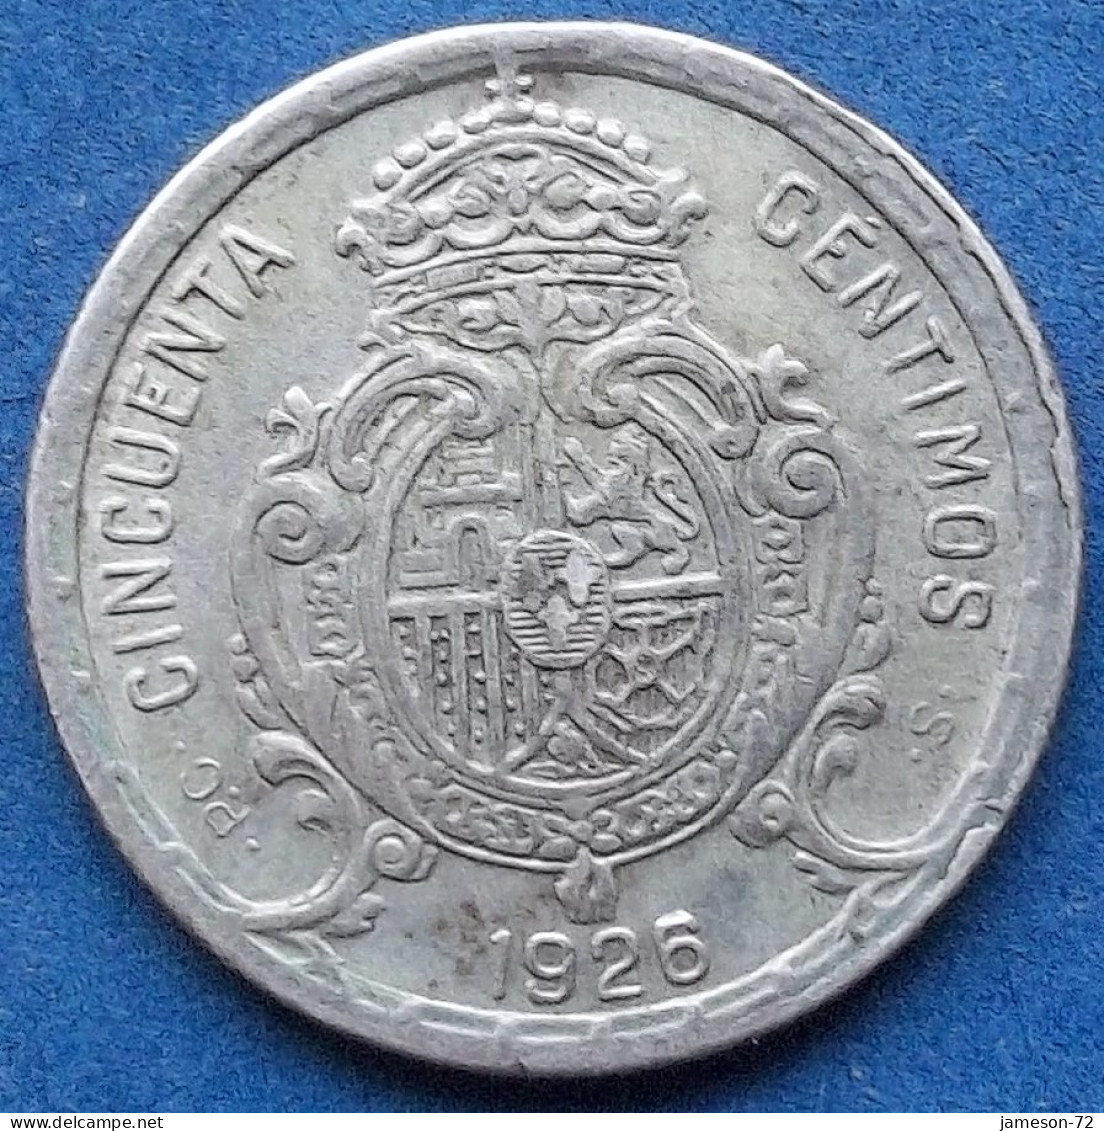 SPAIN - Silver 50 Centimos 1926 PC S KM# 741 Alfonso XIII (1886-1931) - Edelweiss Coins - Eerste Muntslagen